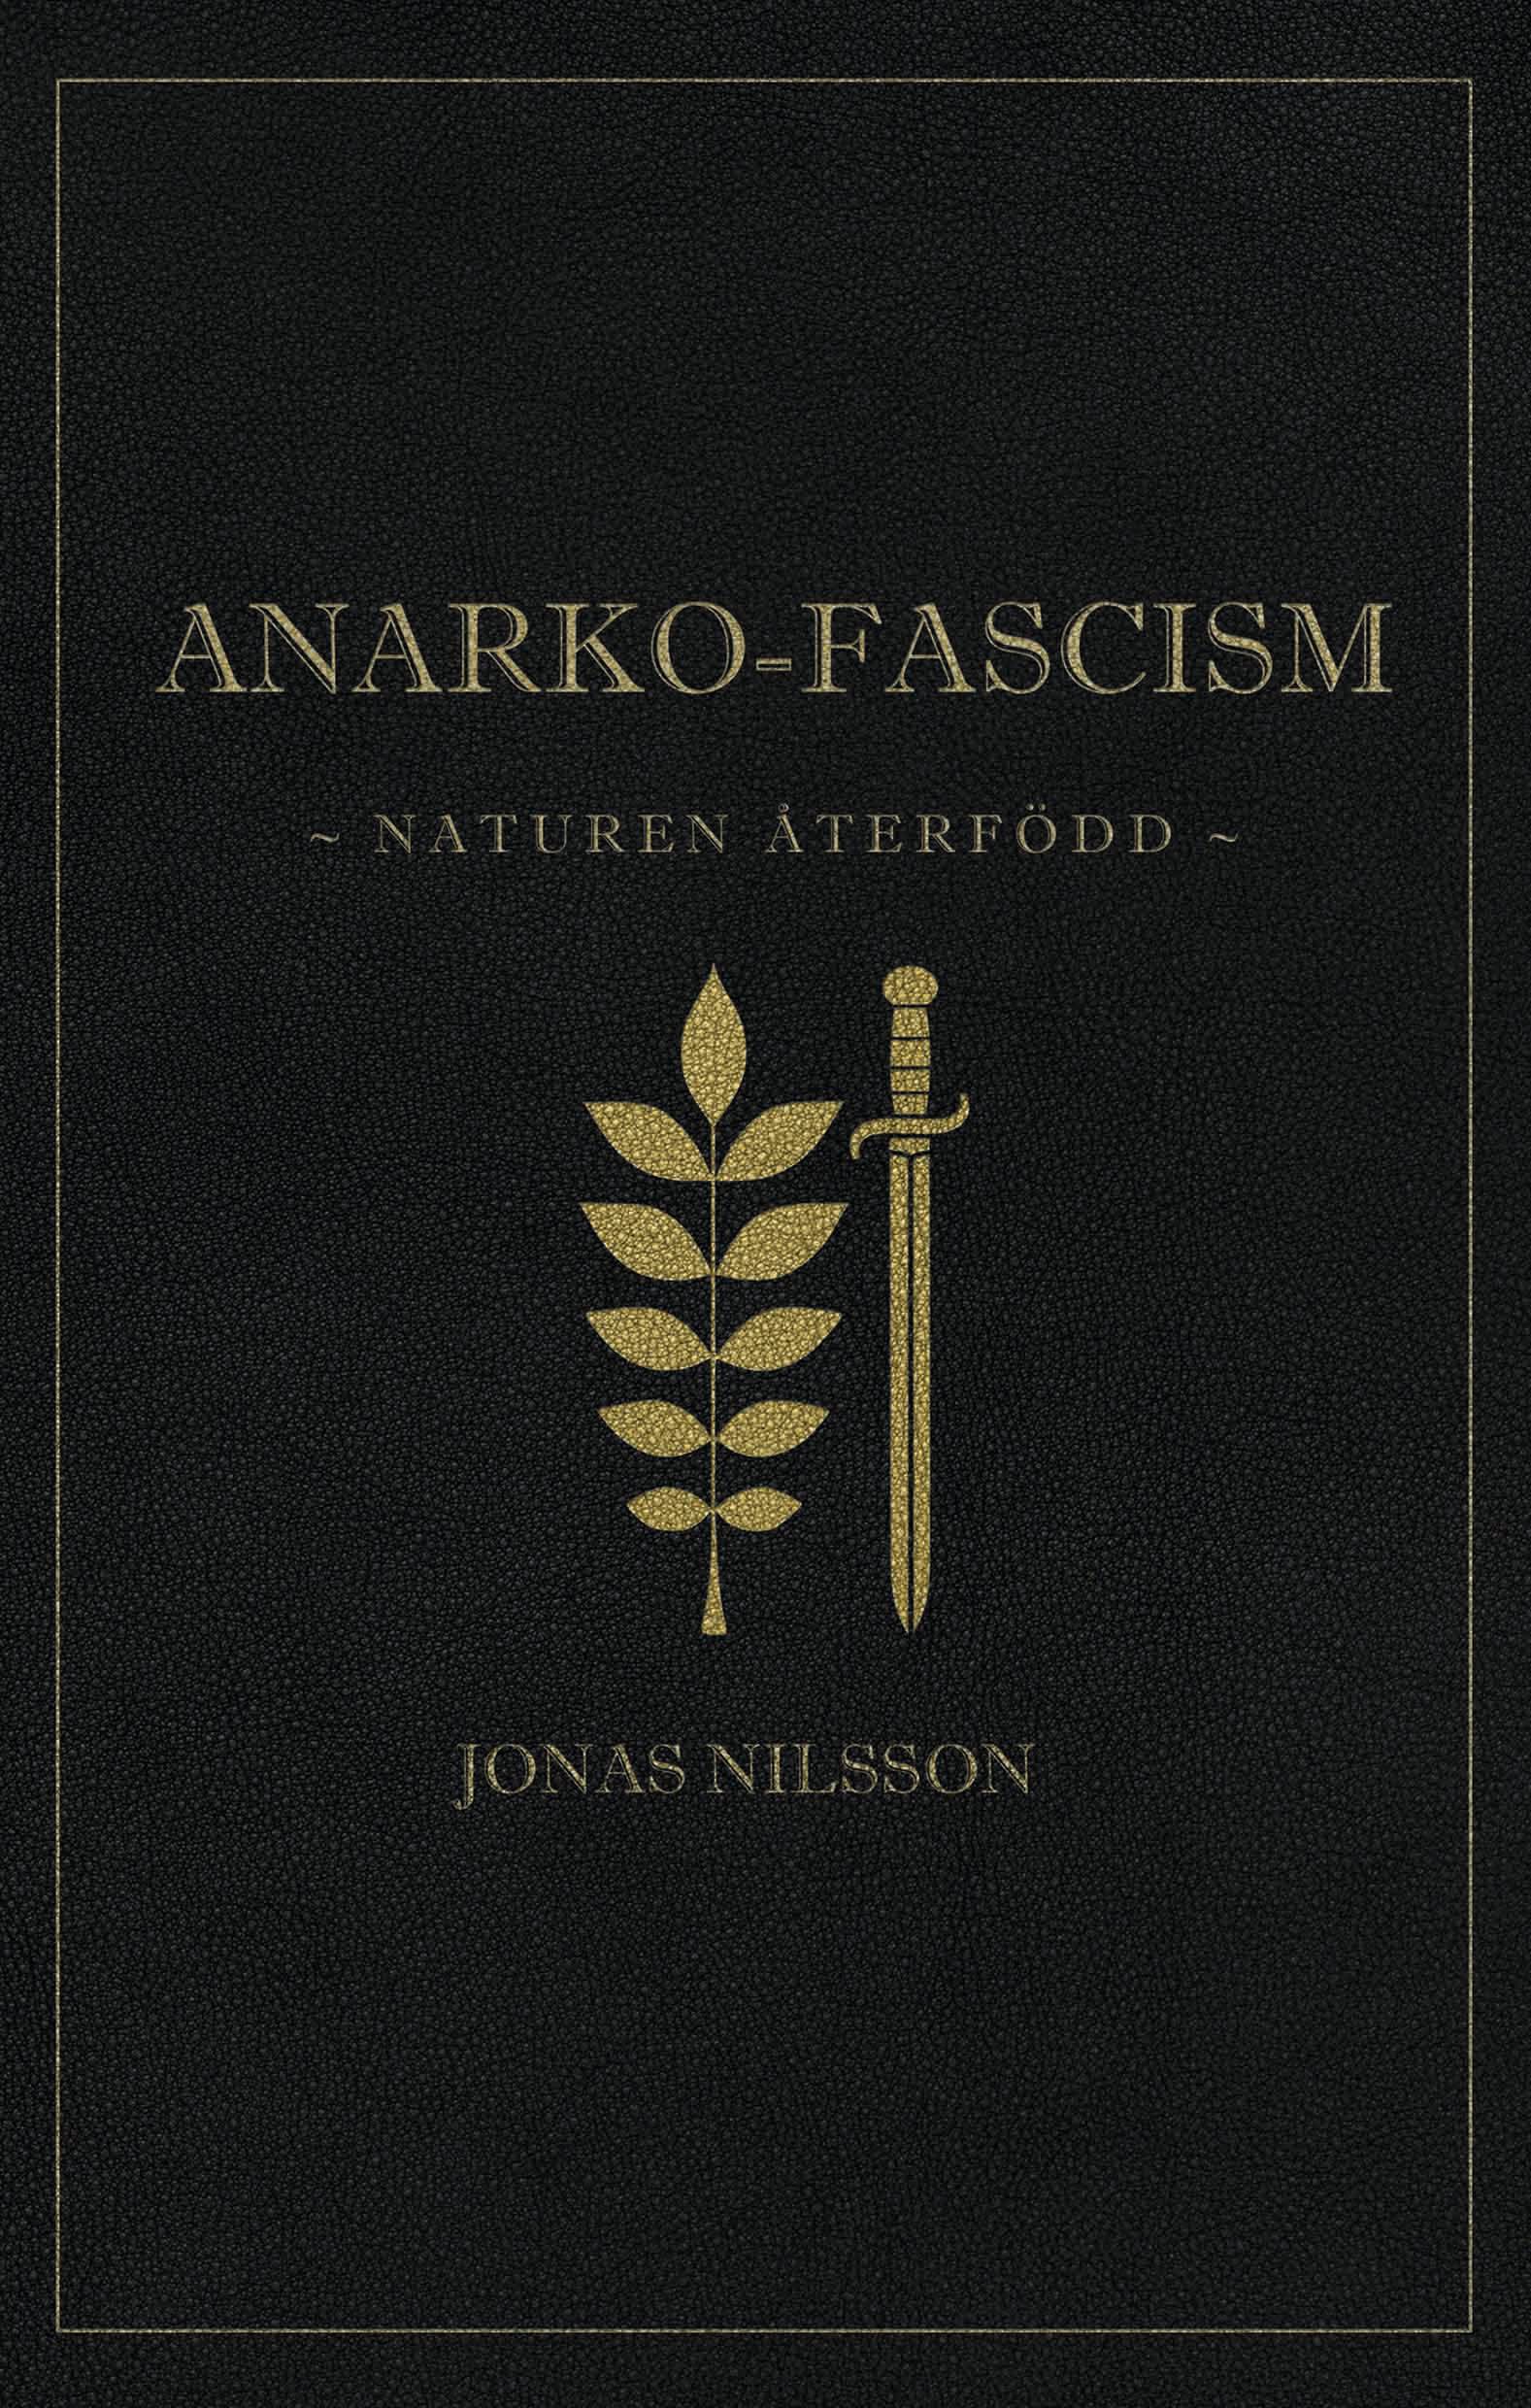 Anarko-fascism: Naturen återfödd